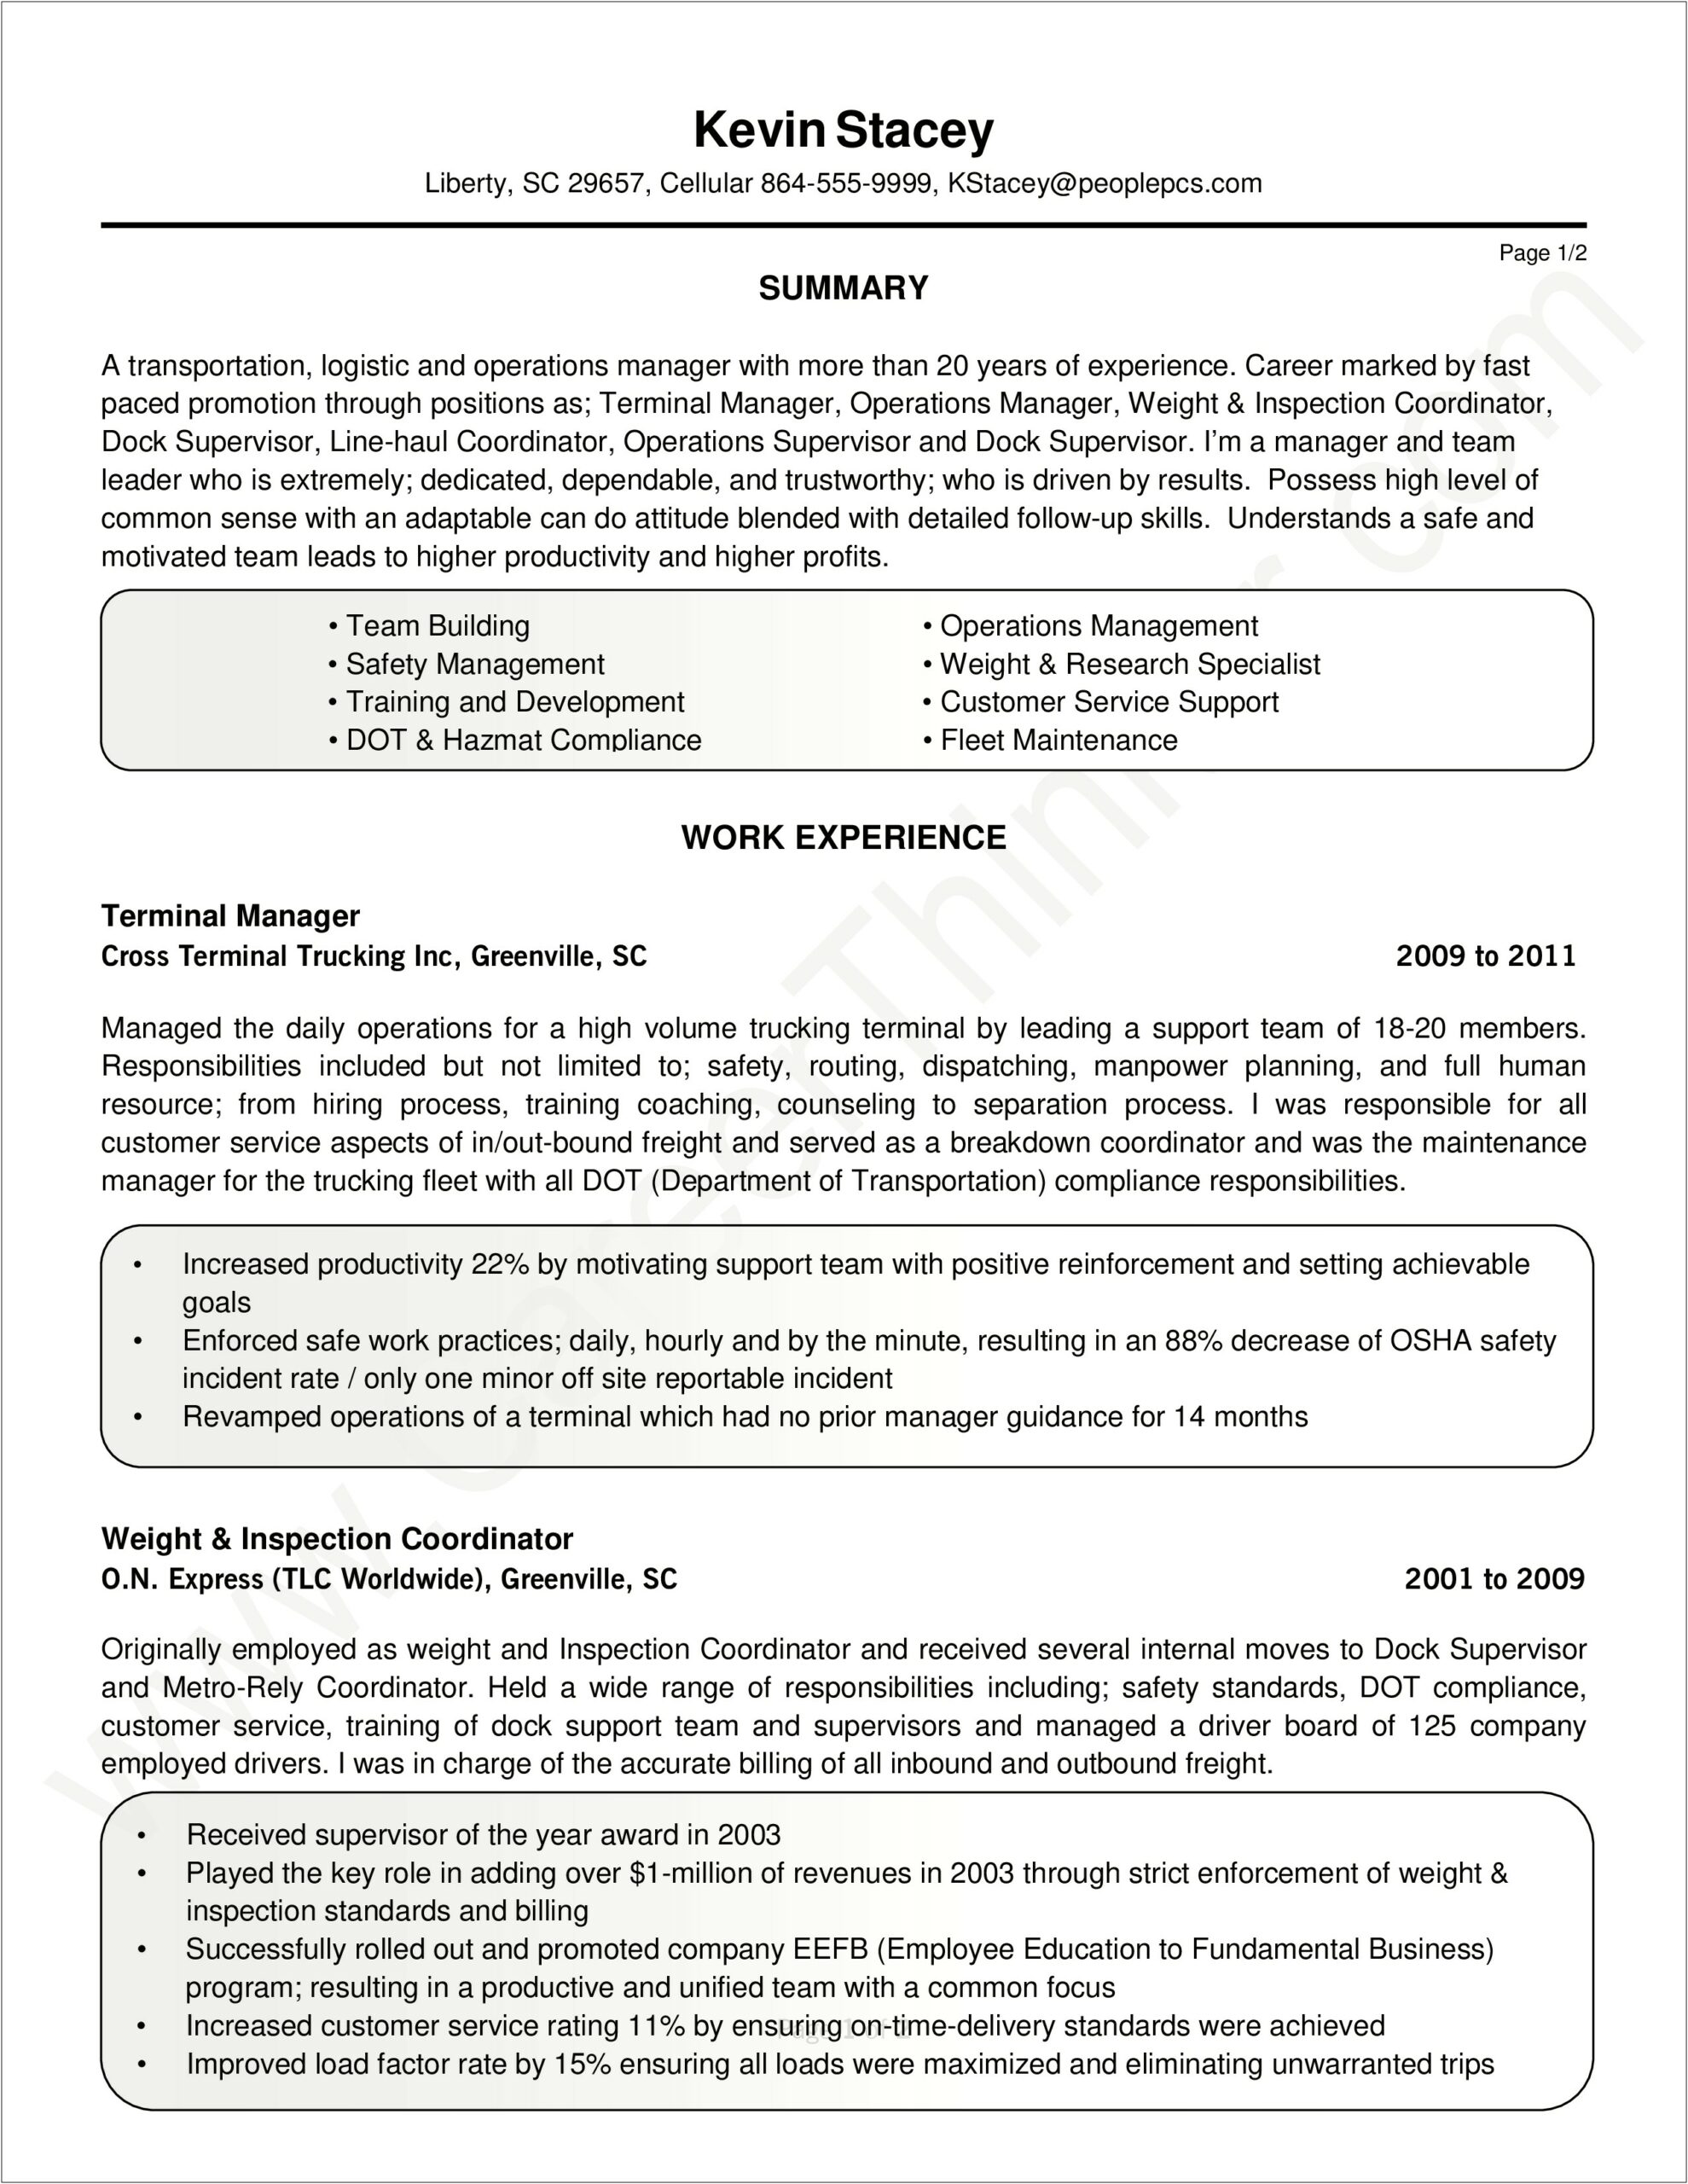 Inbound Customer Service Job Description Resume